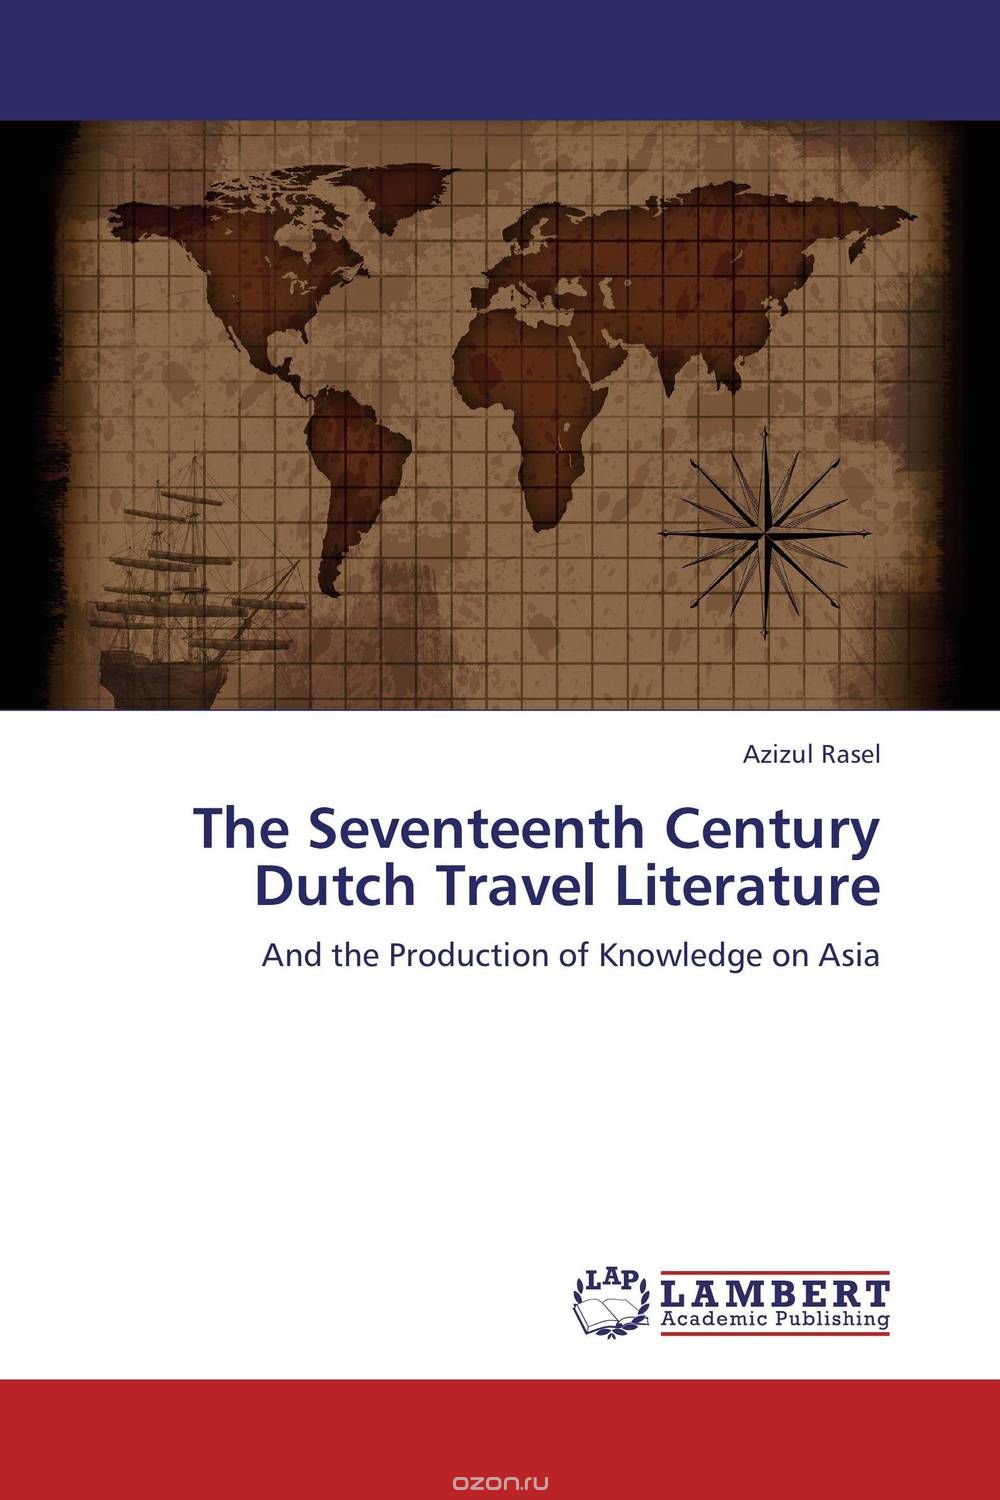 The Seventeenth Century Dutch Travel Literature